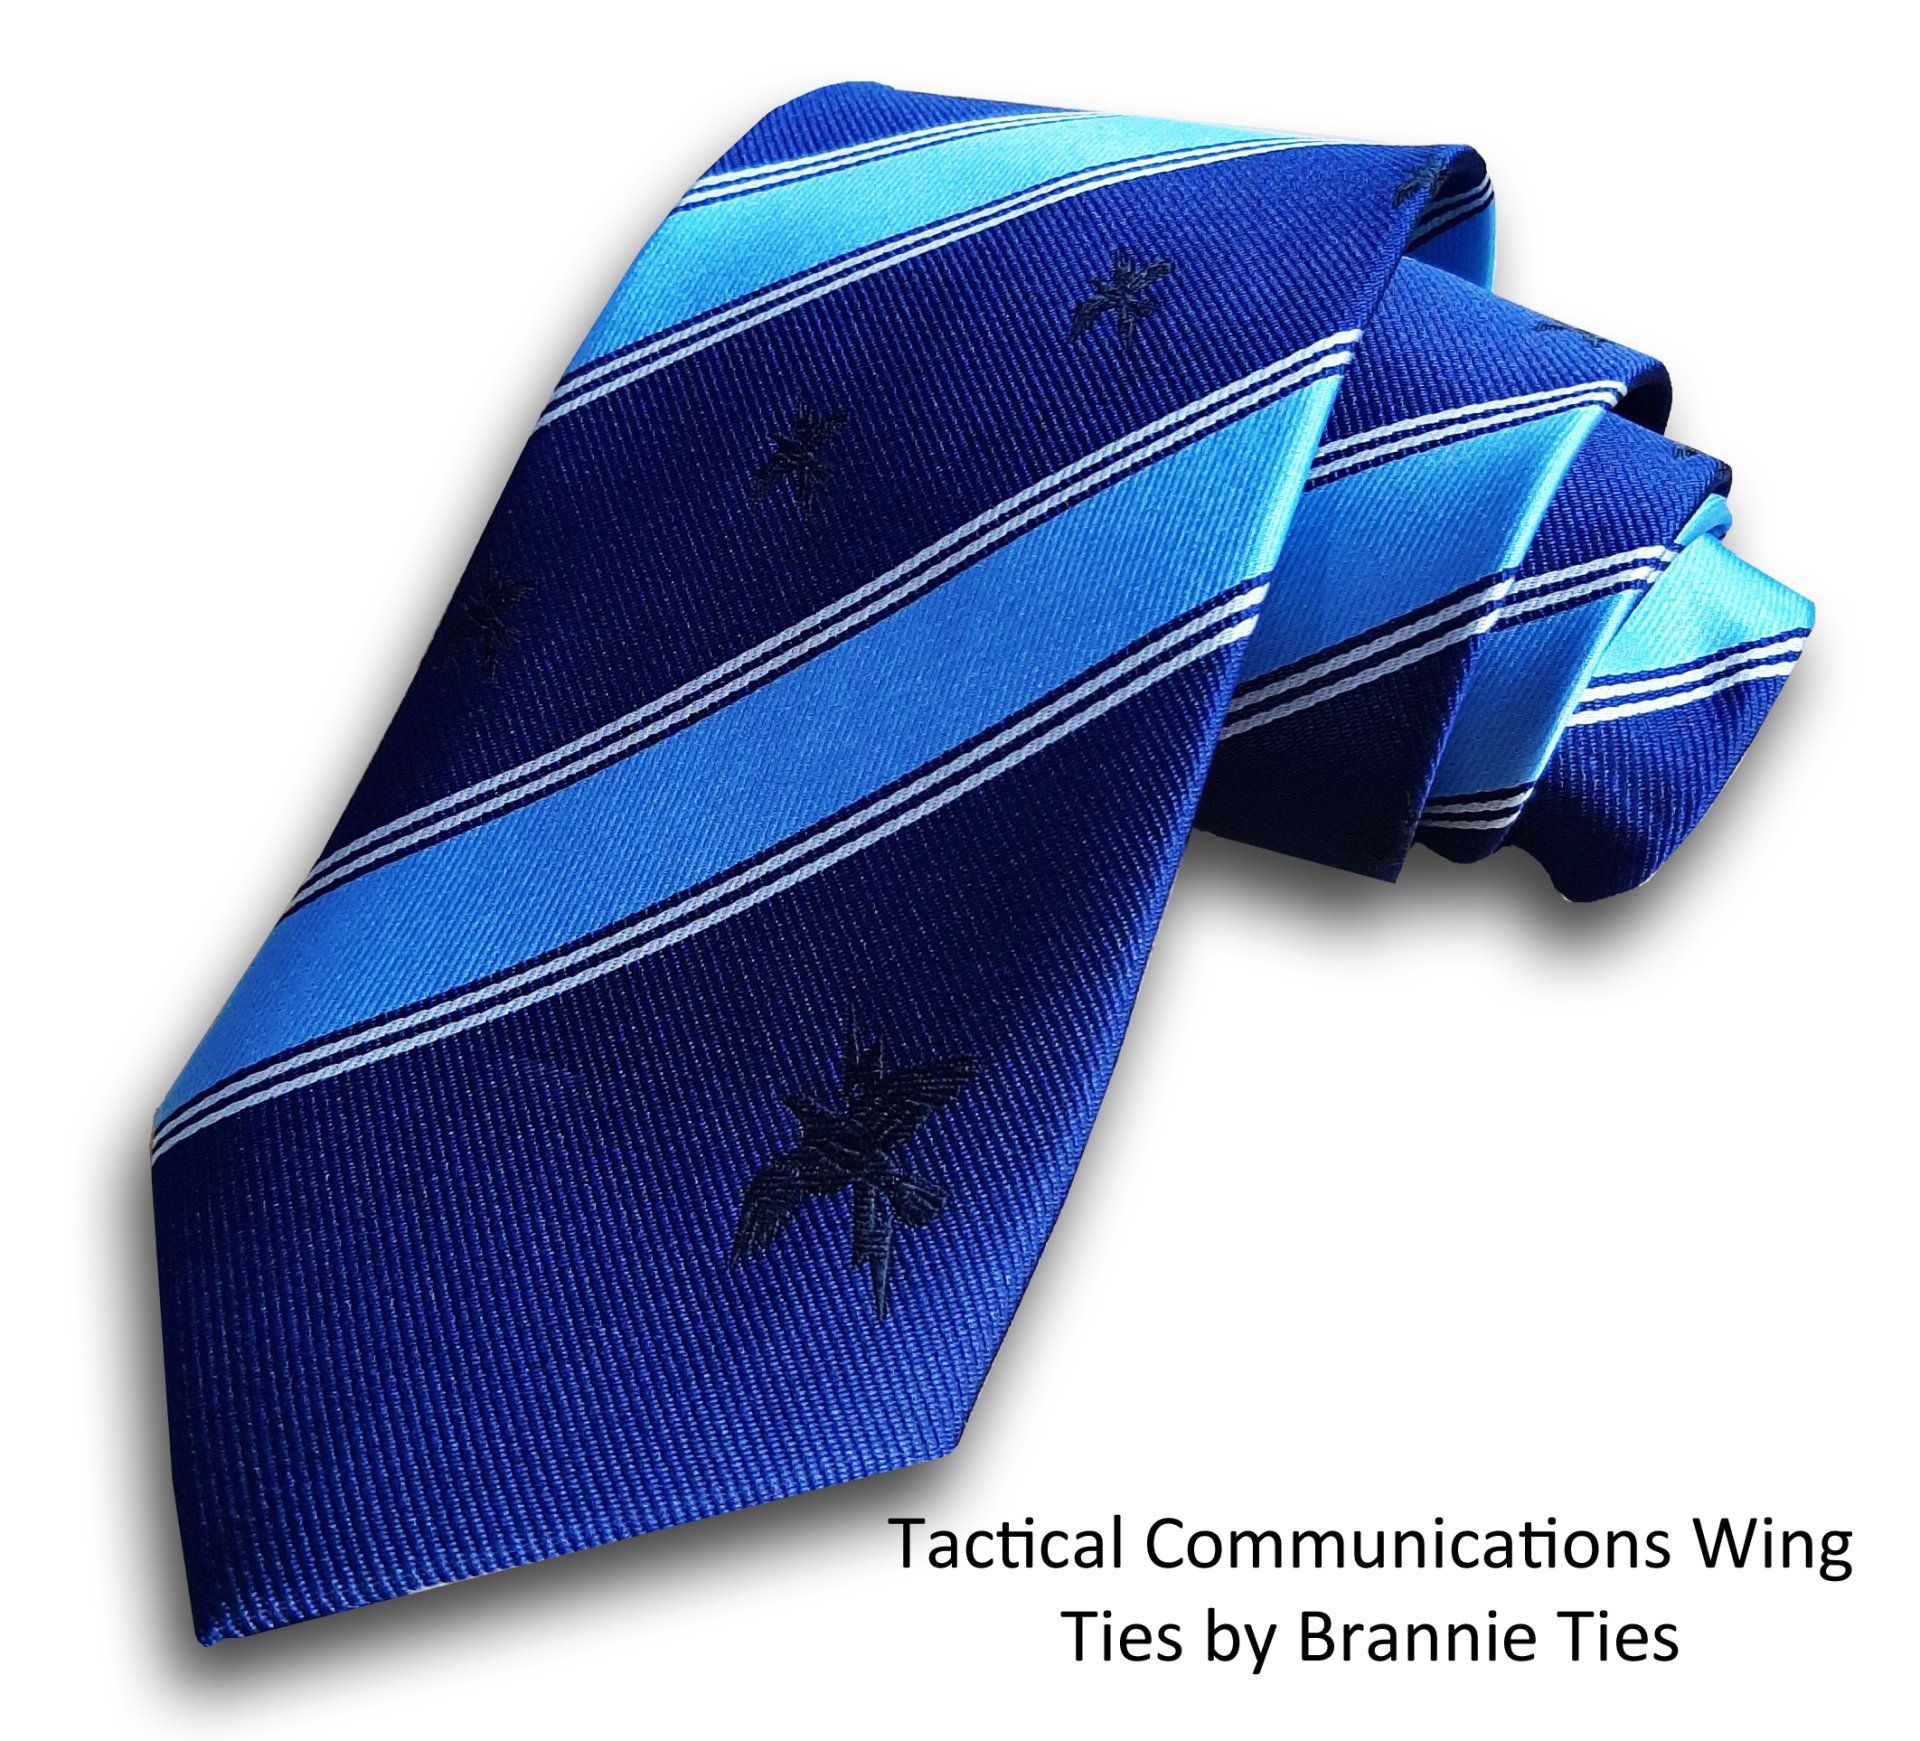 Tactical wing ties